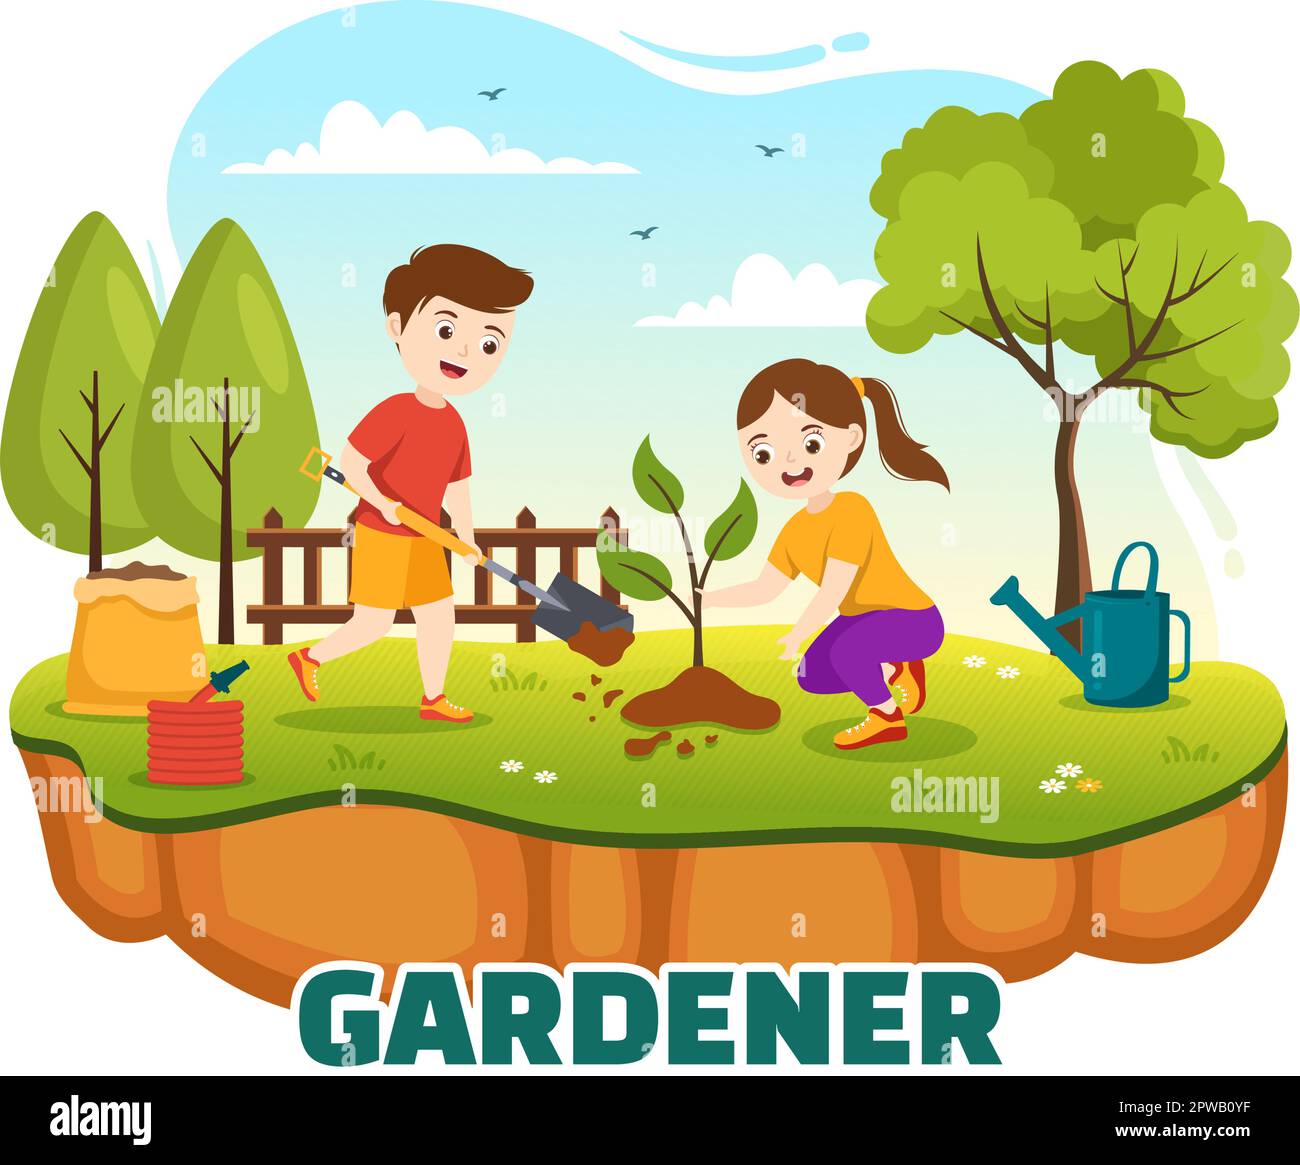 https://c8.alamy.com/comp/2PWB0YF/gardener-illustration-with-kids-garden-tools-farming-grows-vegetables-in-botanical-summer-gardening-cartoon-hand-drawn-for-landing-page-templates-2PWB0YF.jpg